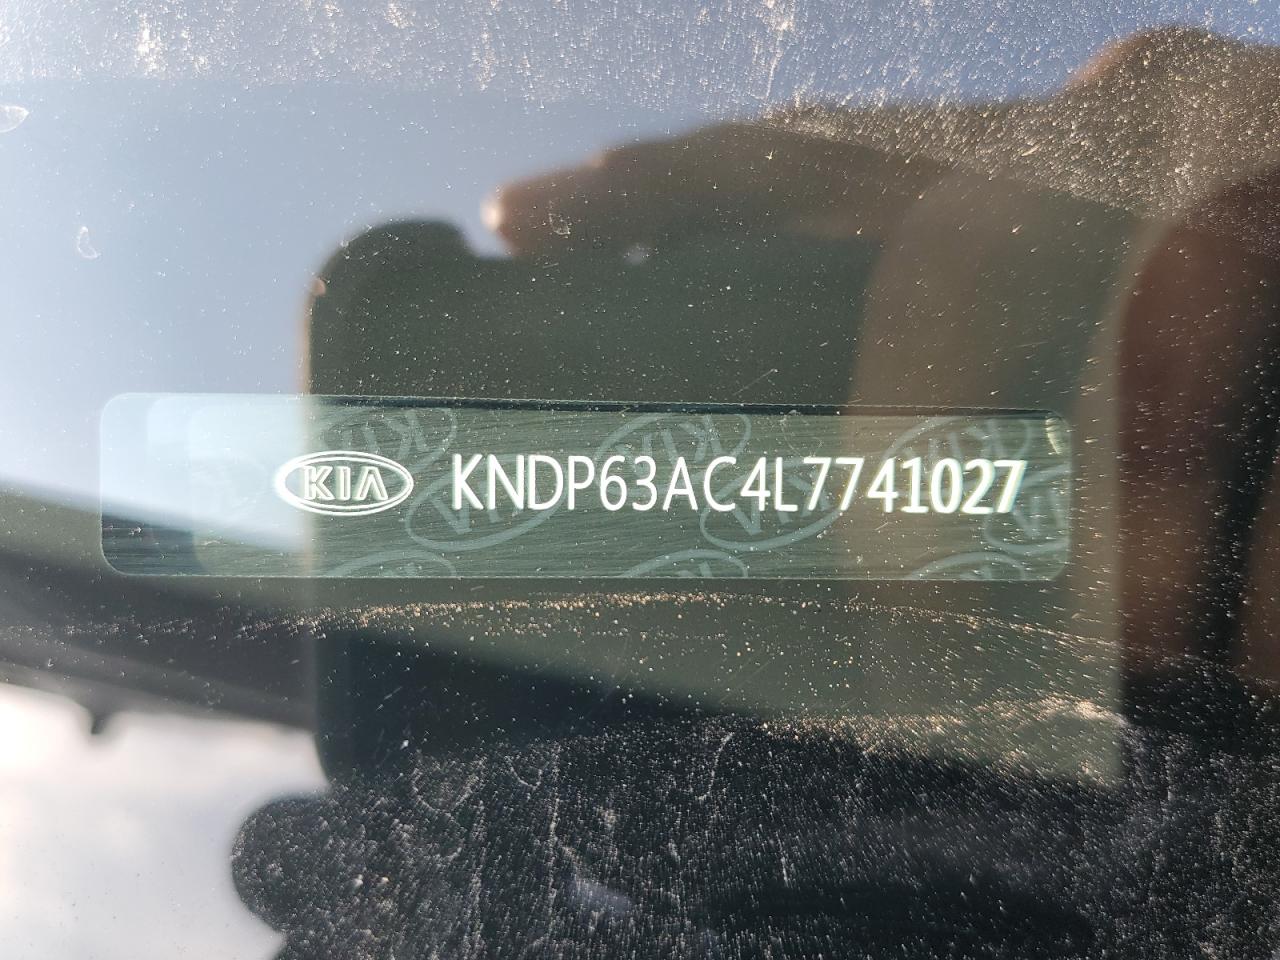 KNDP63AC4L7741027  - KIA SPORTAGE  2020 IMG - 12